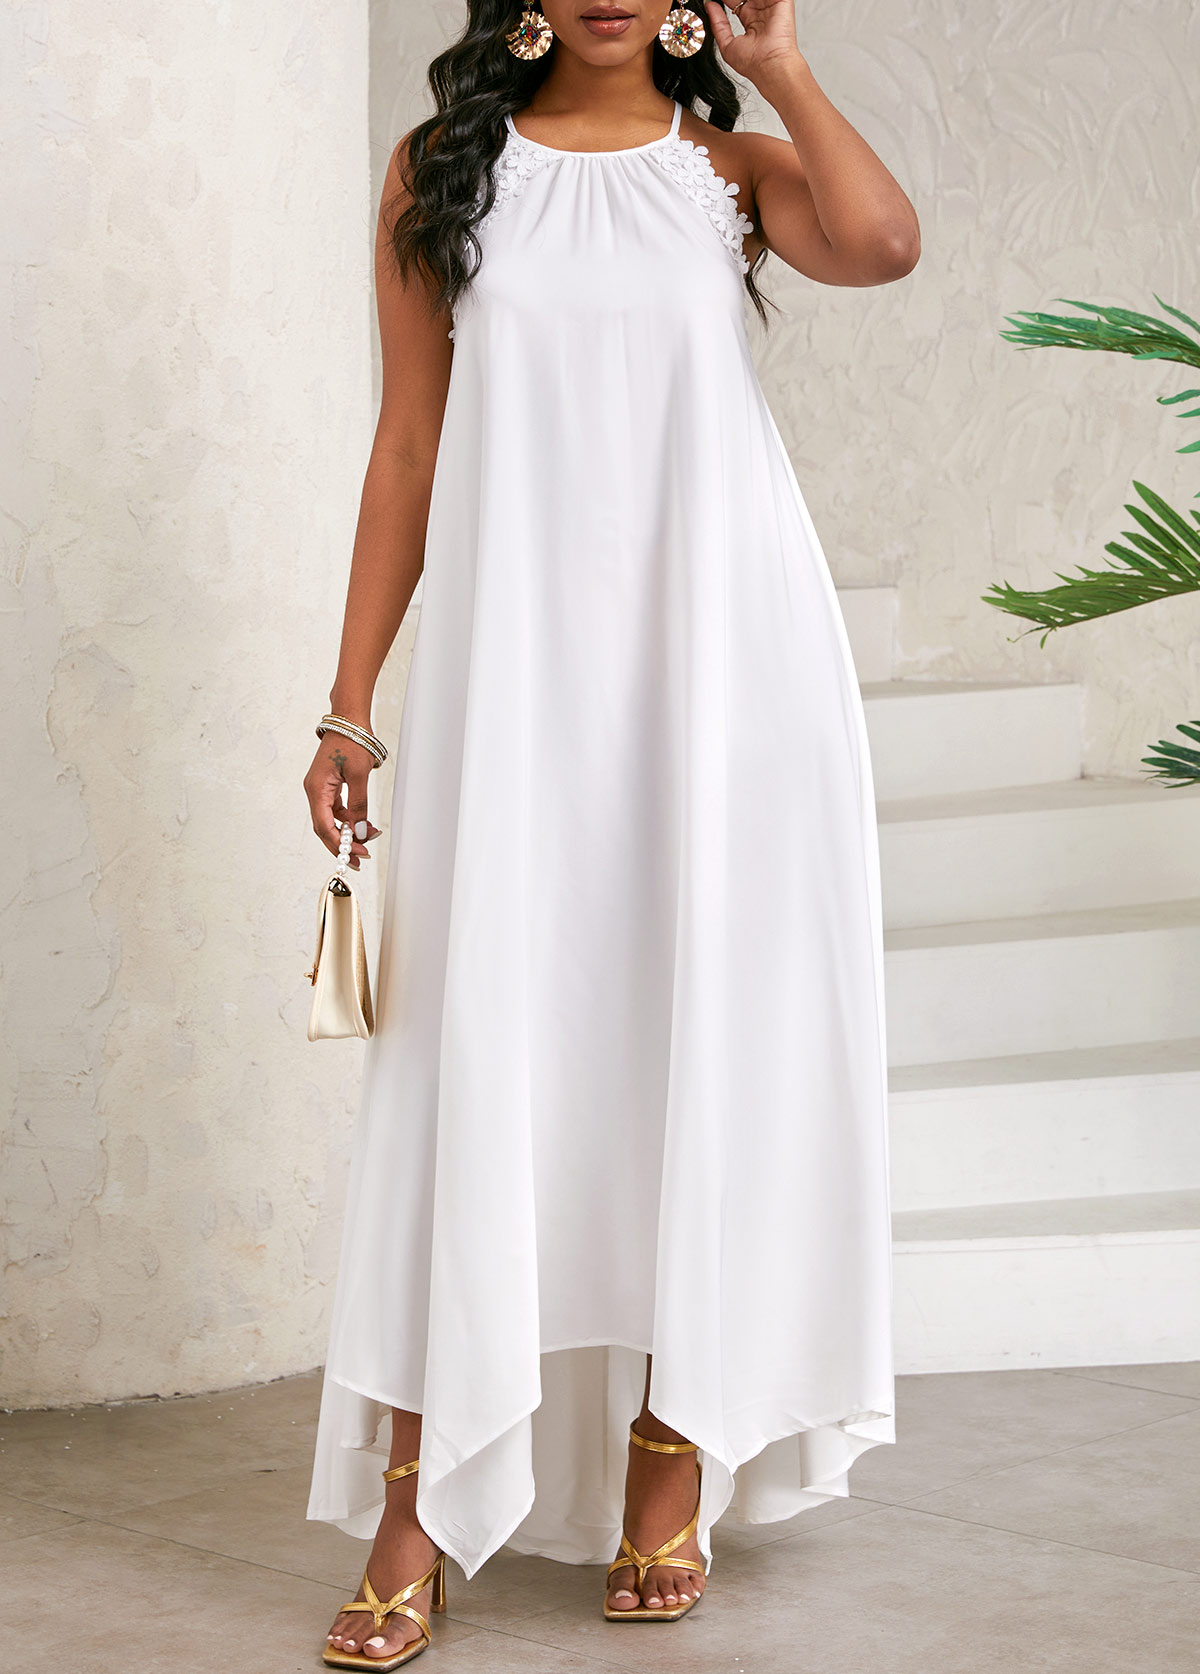 Lace White A Line Sleeveless Maxi Dress